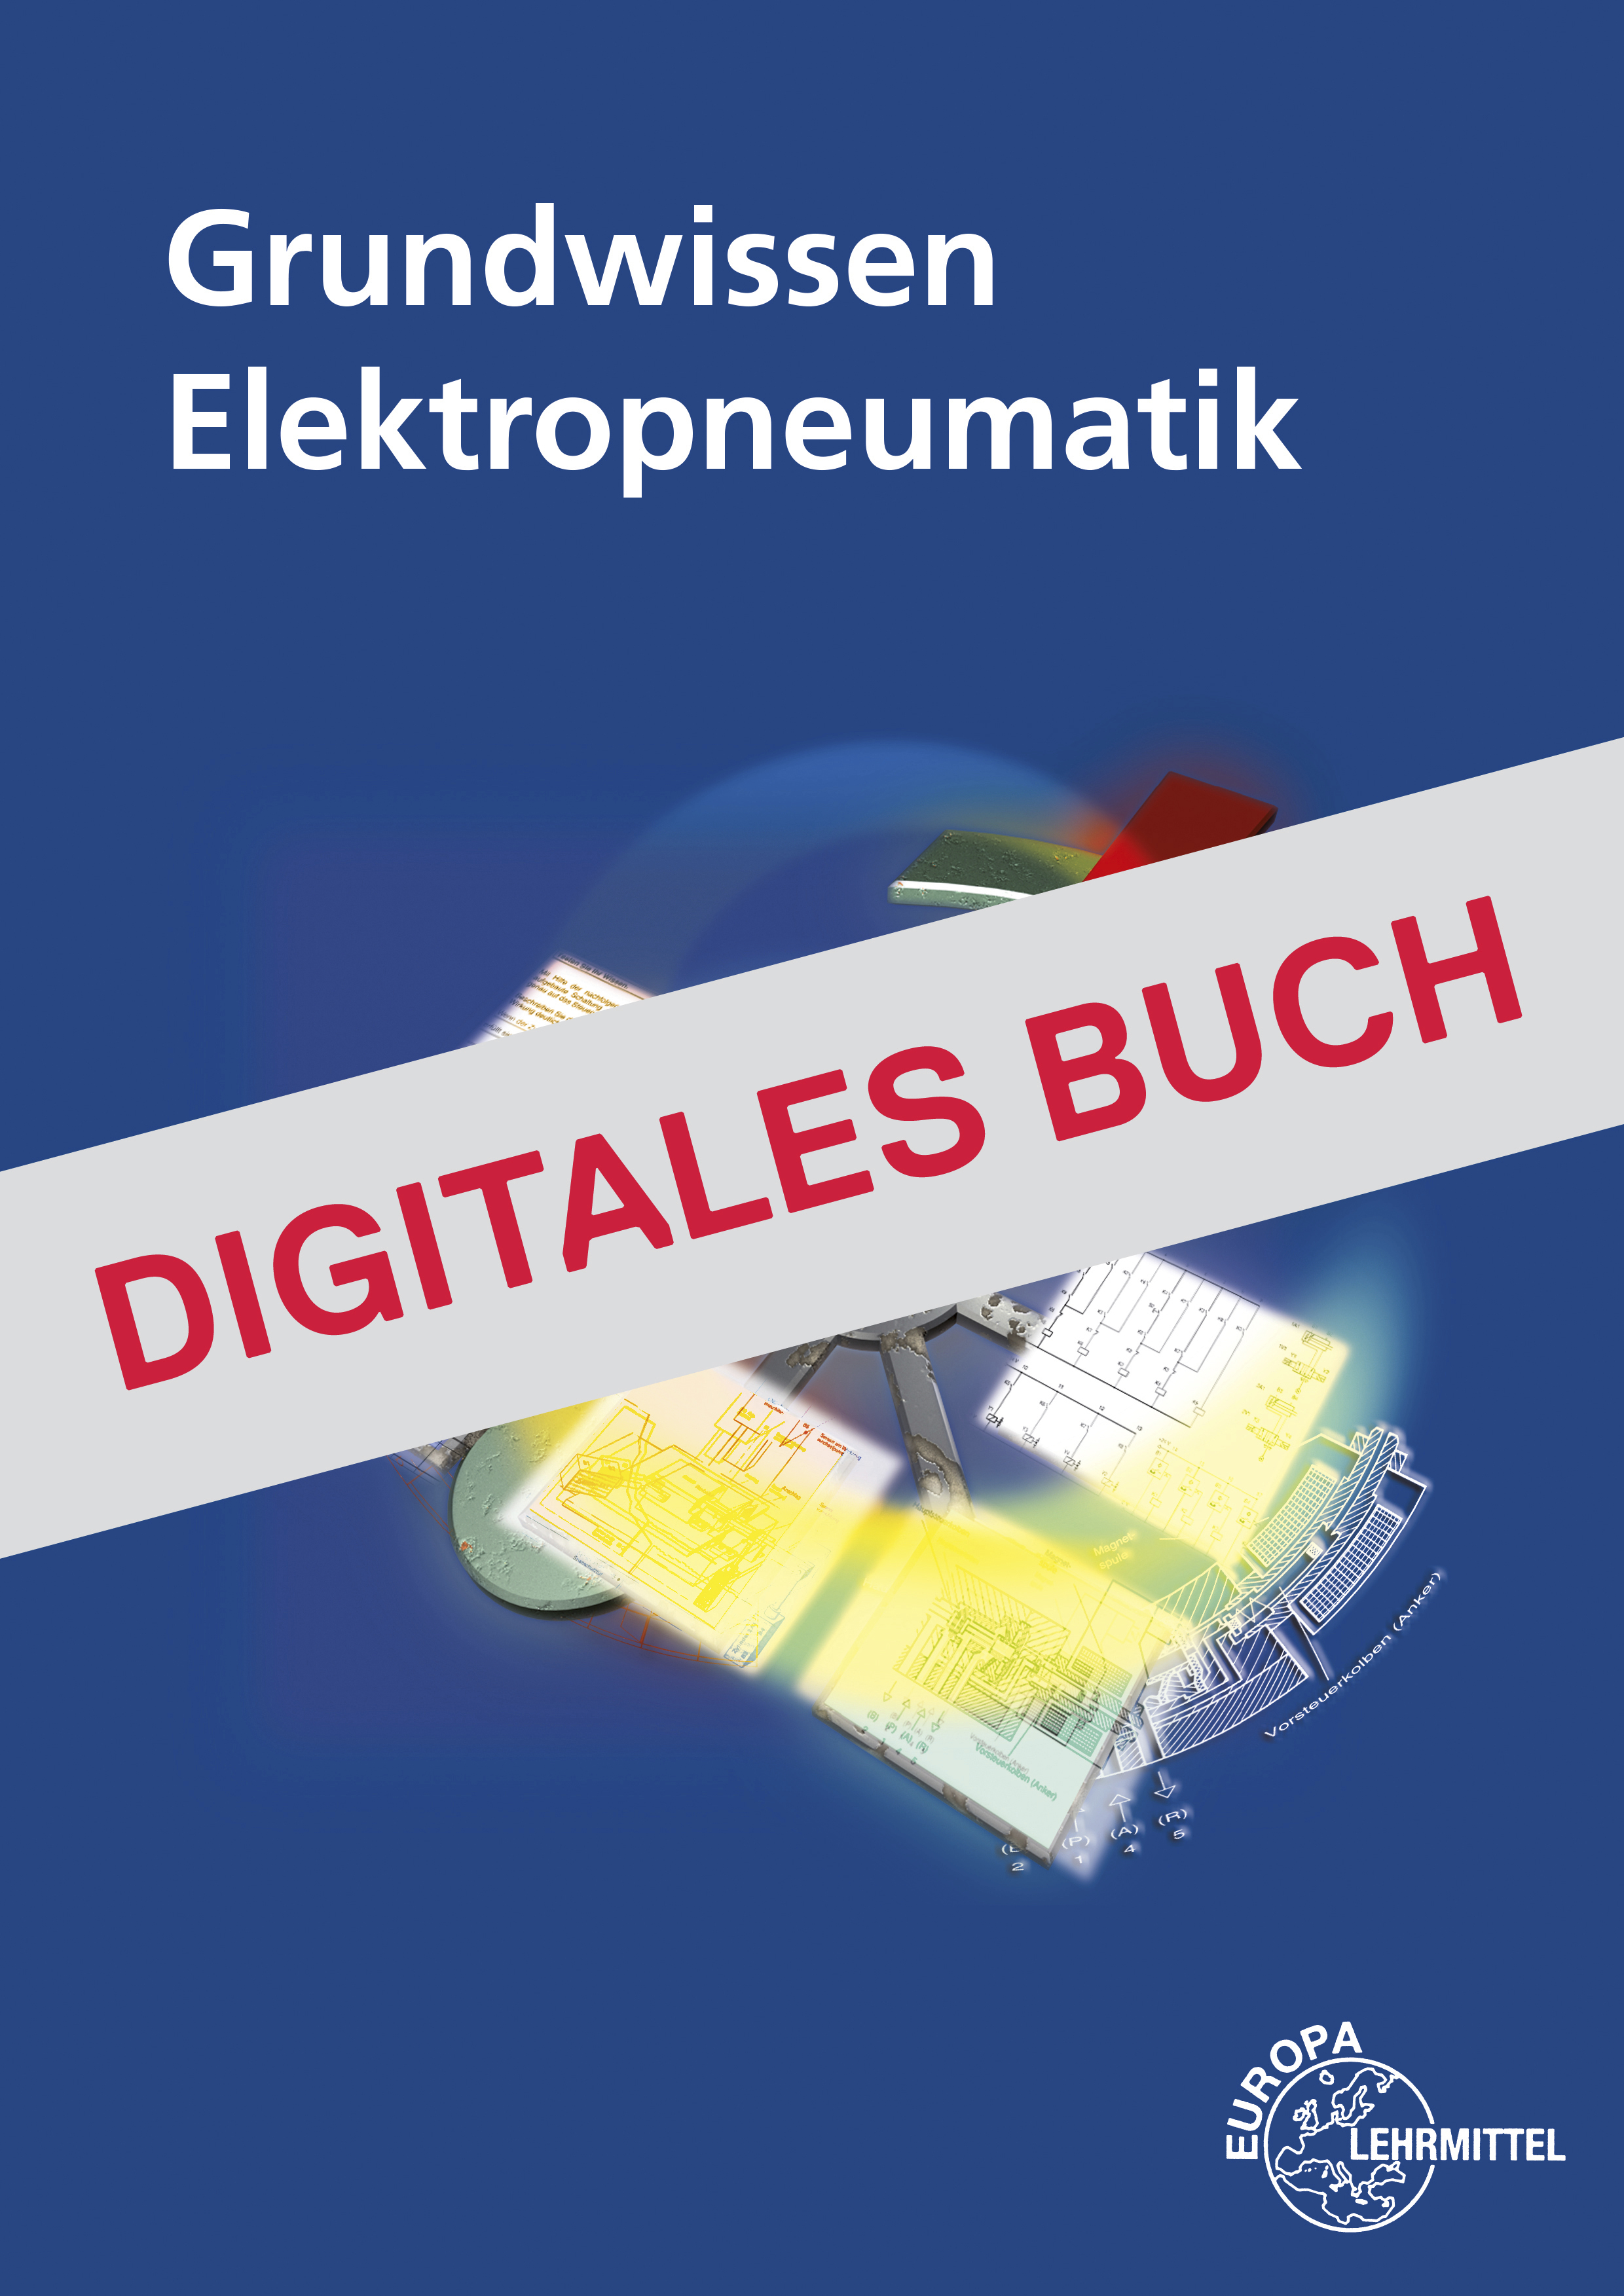 Grundwissen Elektropneumatik - Digitales Buch